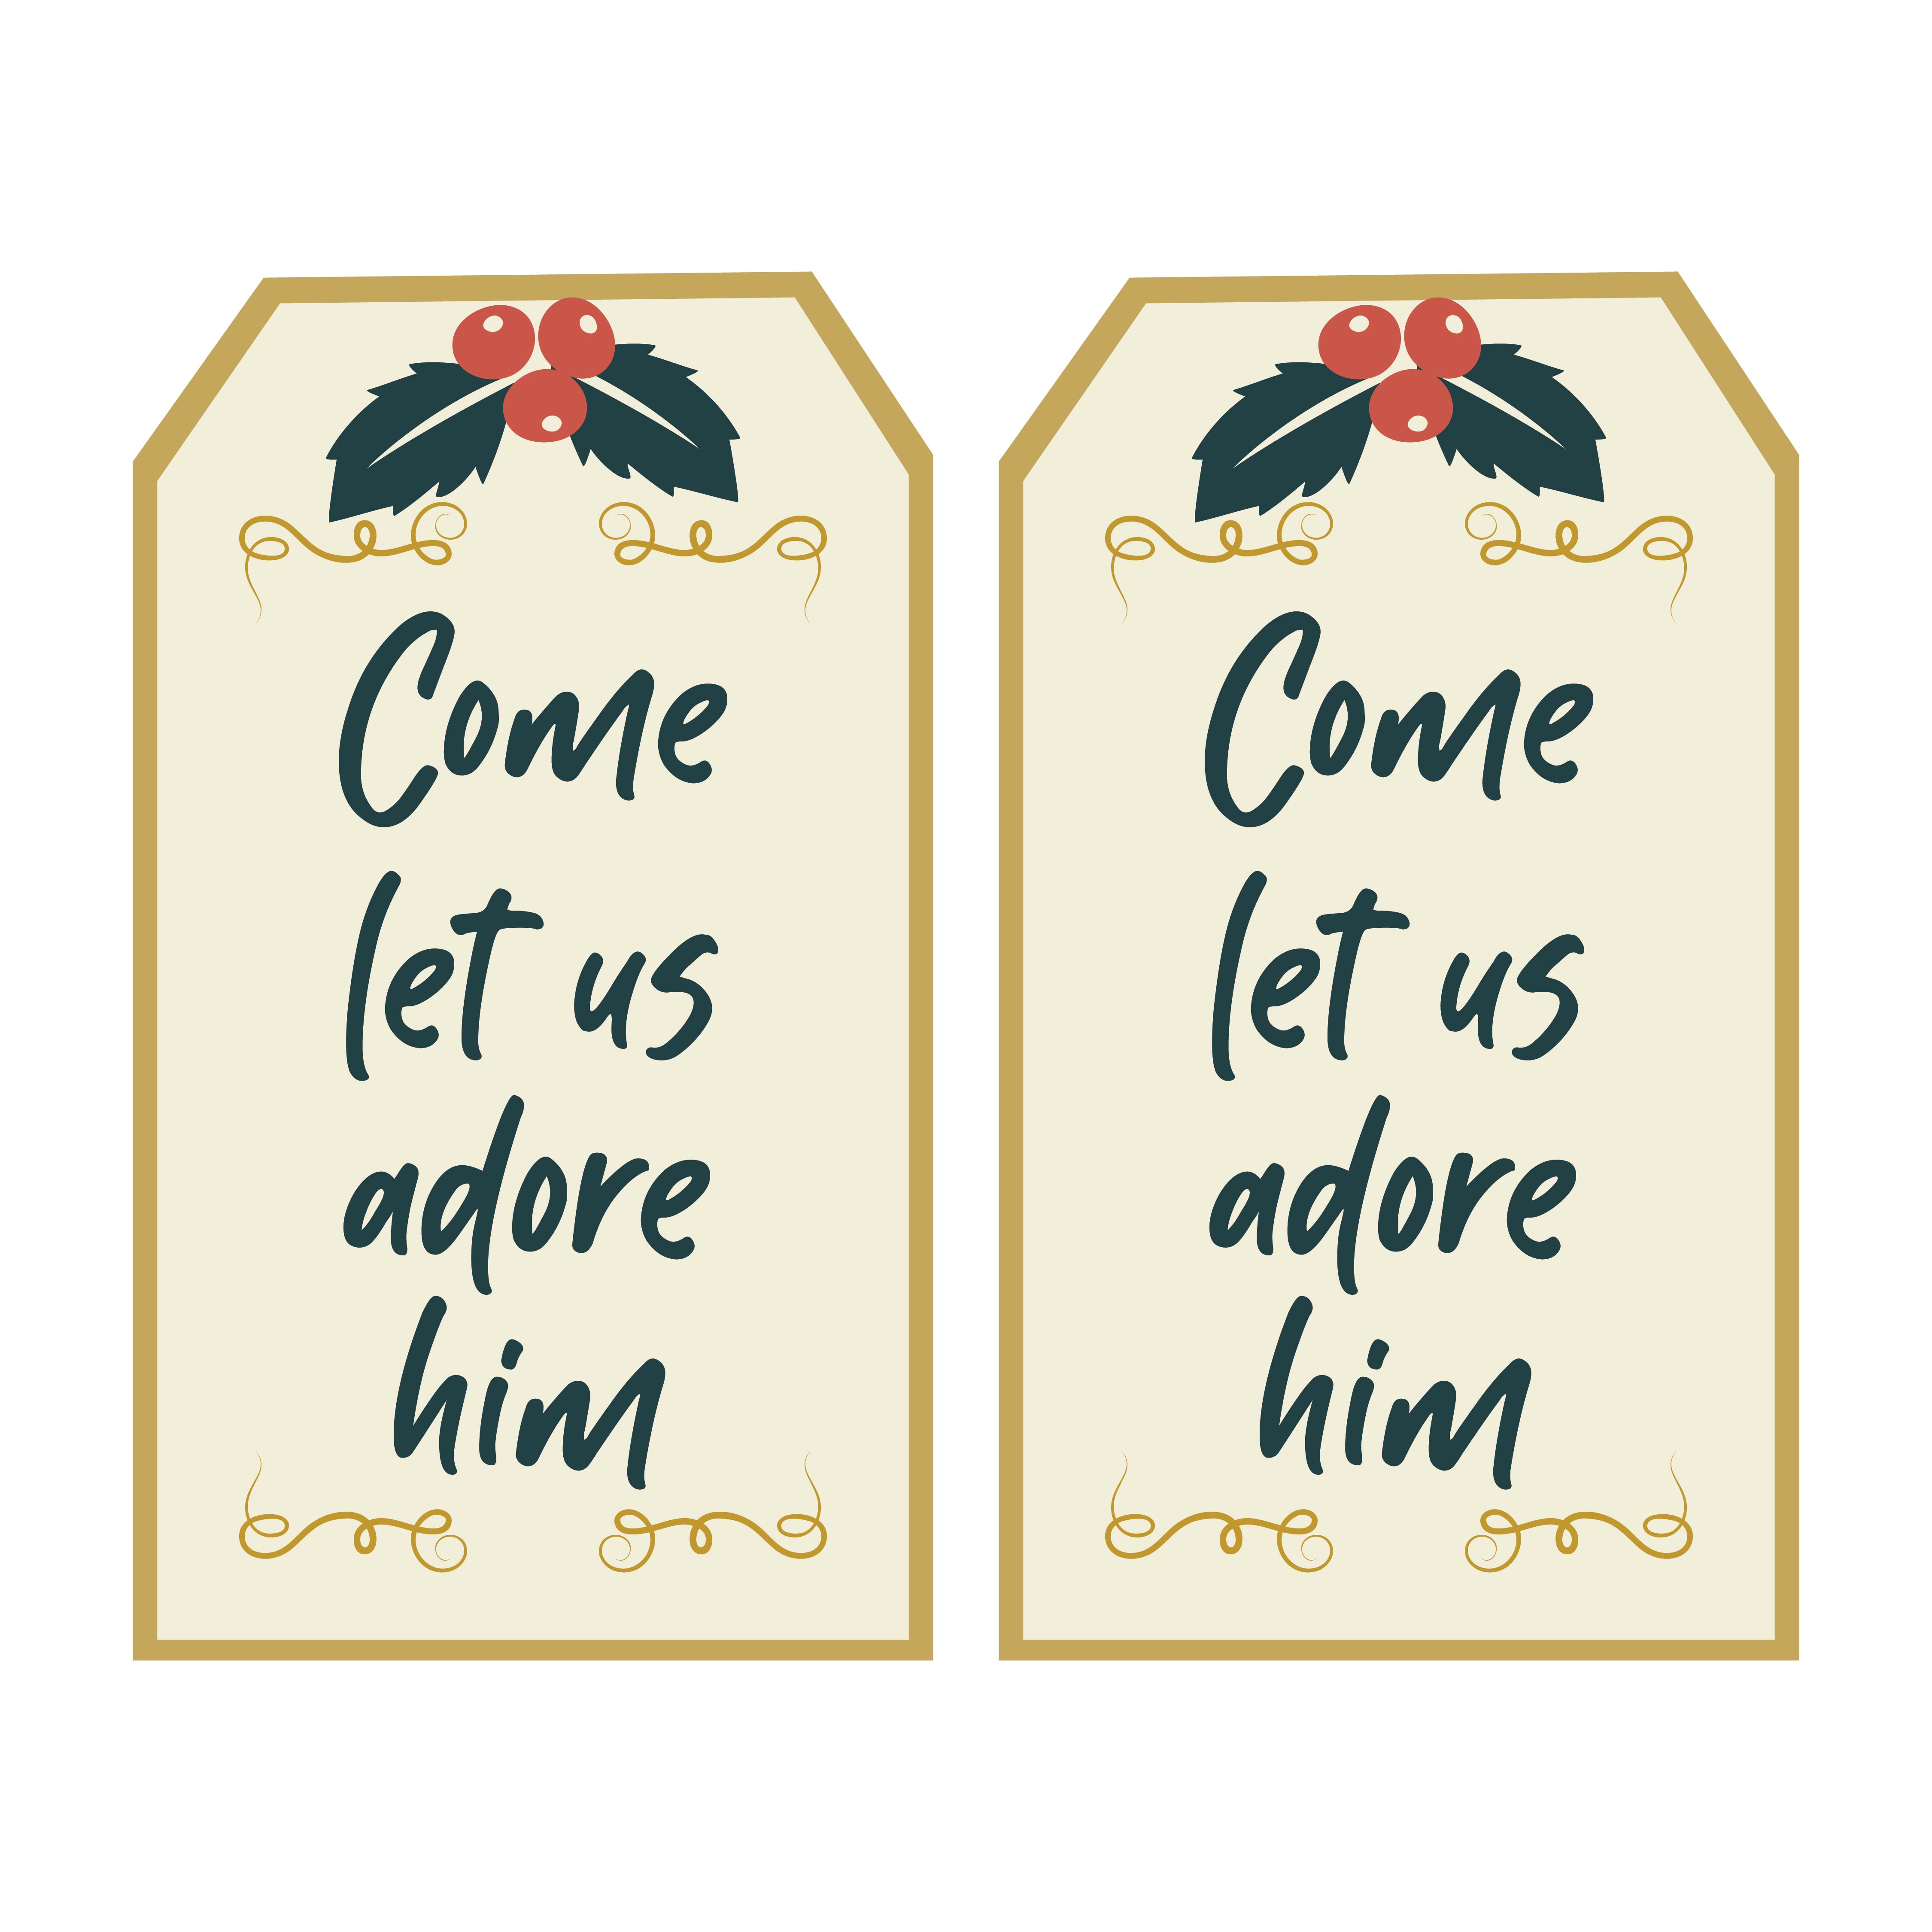 Free Printable Religious Christmas Gift Tags